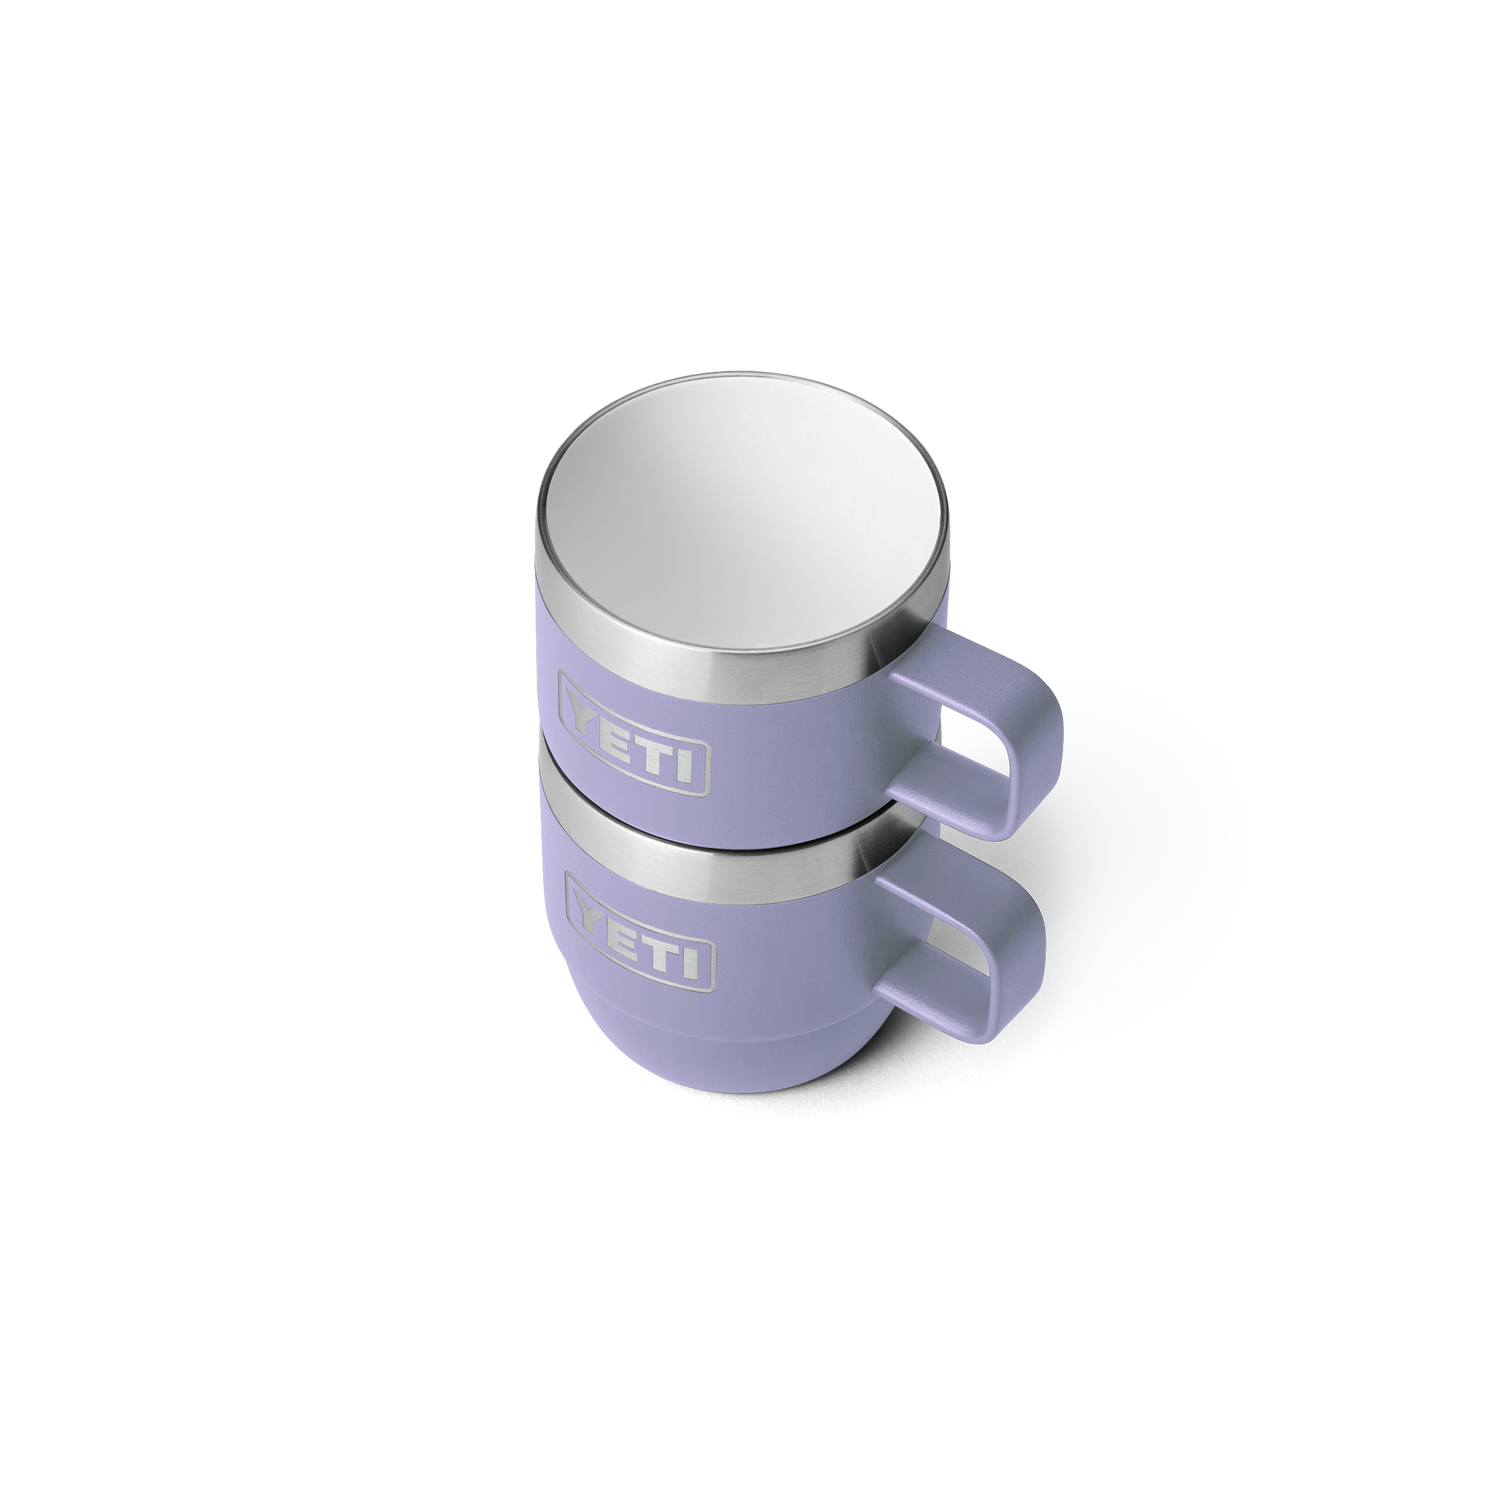 Yeti Rambler 10oz Stackable Mug with Magslider - Cosmic Lilac